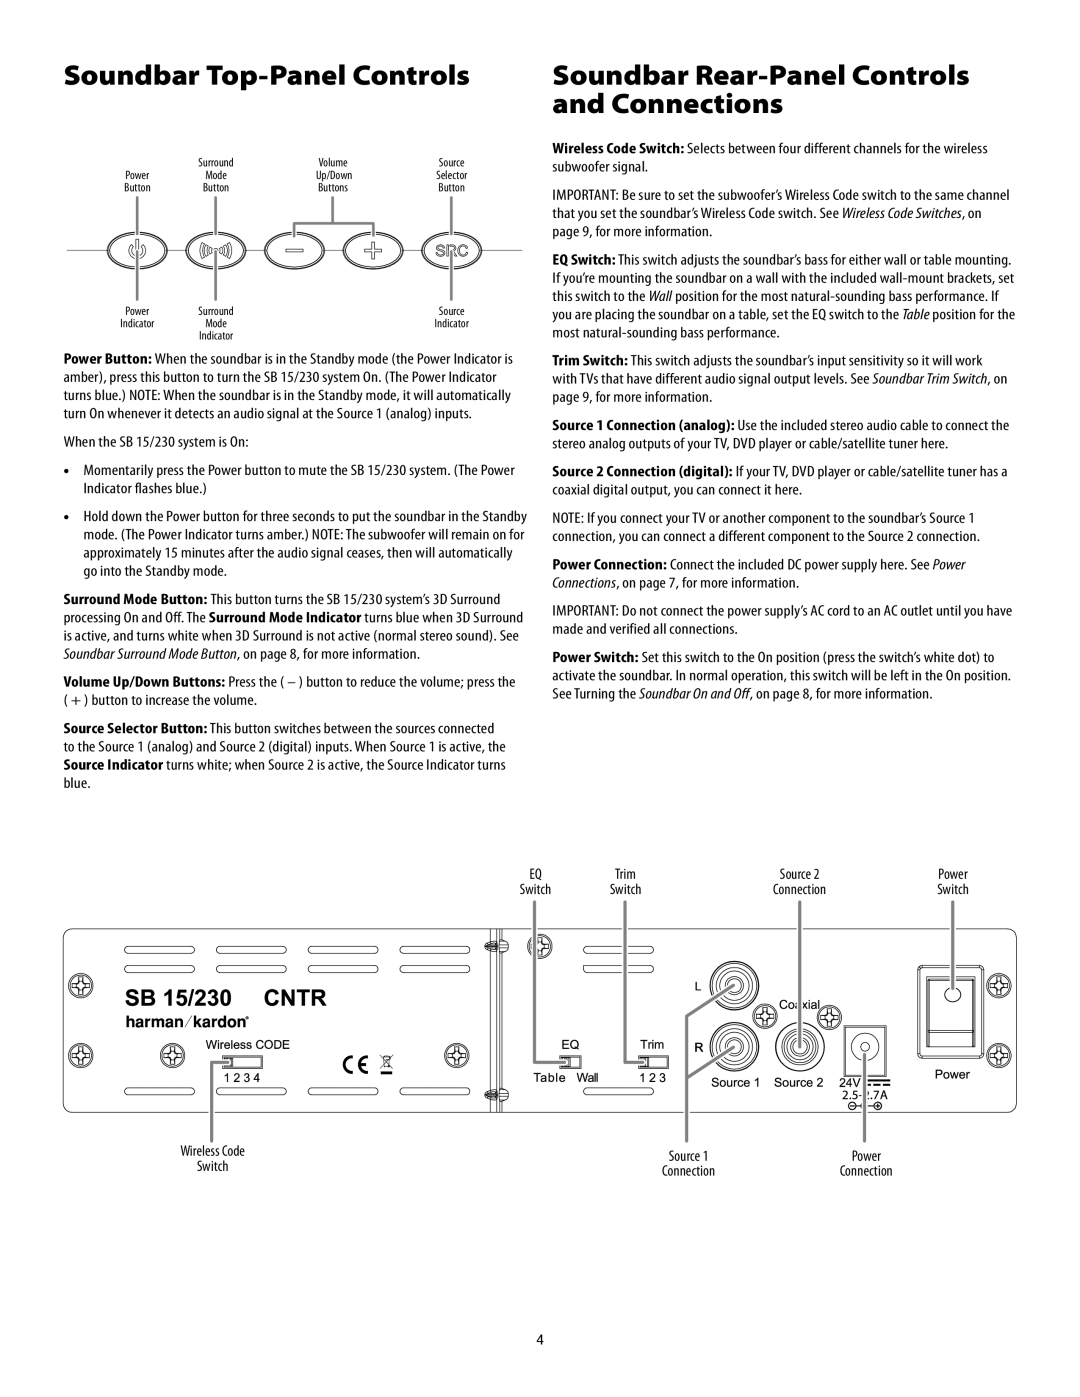 Harman-Kardon SB15/230 manual Soundbar Top-PanelControls, Soundbar Rear-PanelControls and Connections 